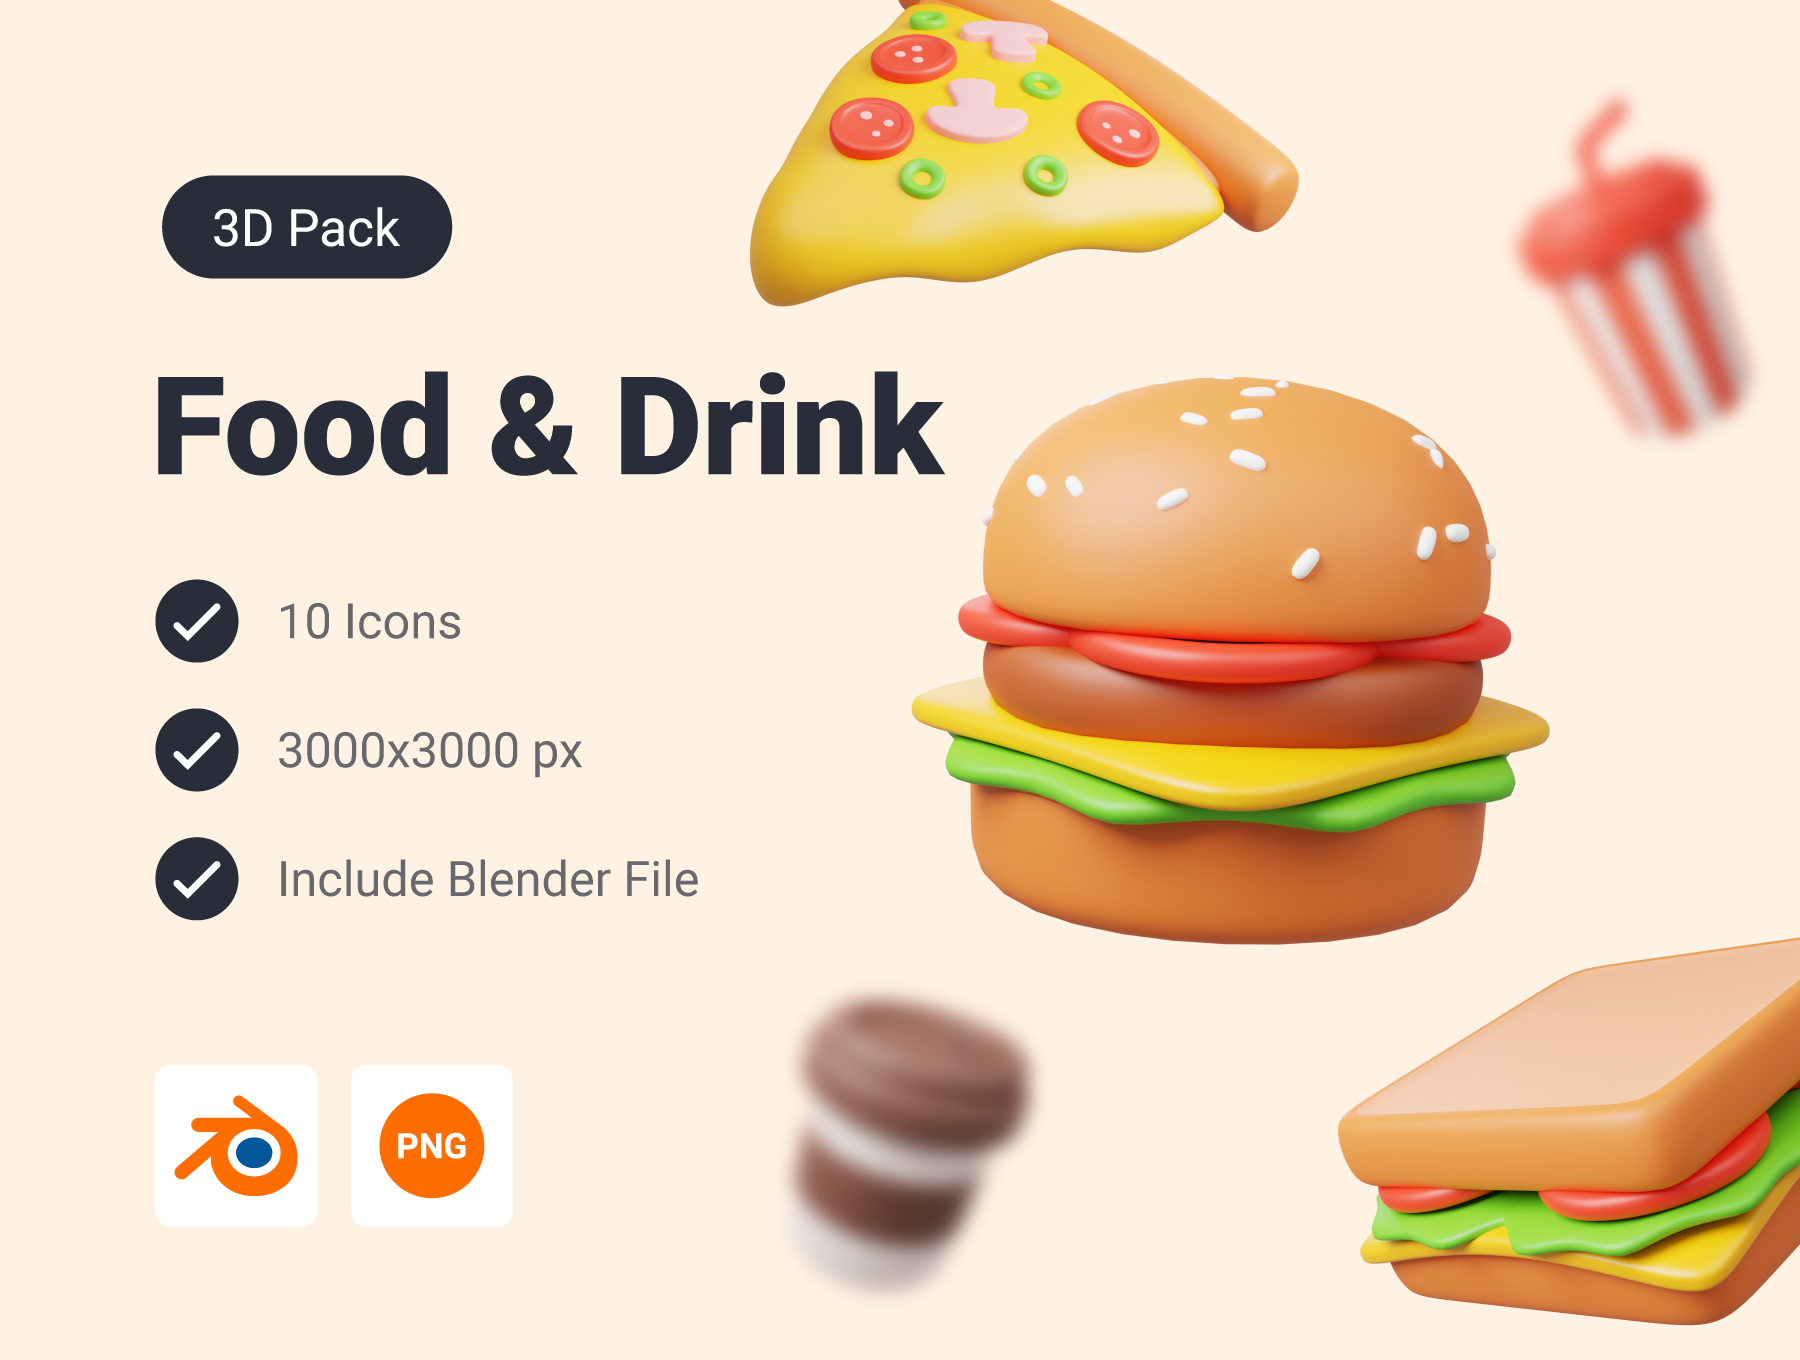 高质量Blender渲染食物饮料快餐店汉堡竖条3D插画素材 Food and Drink 3D Icon Pack